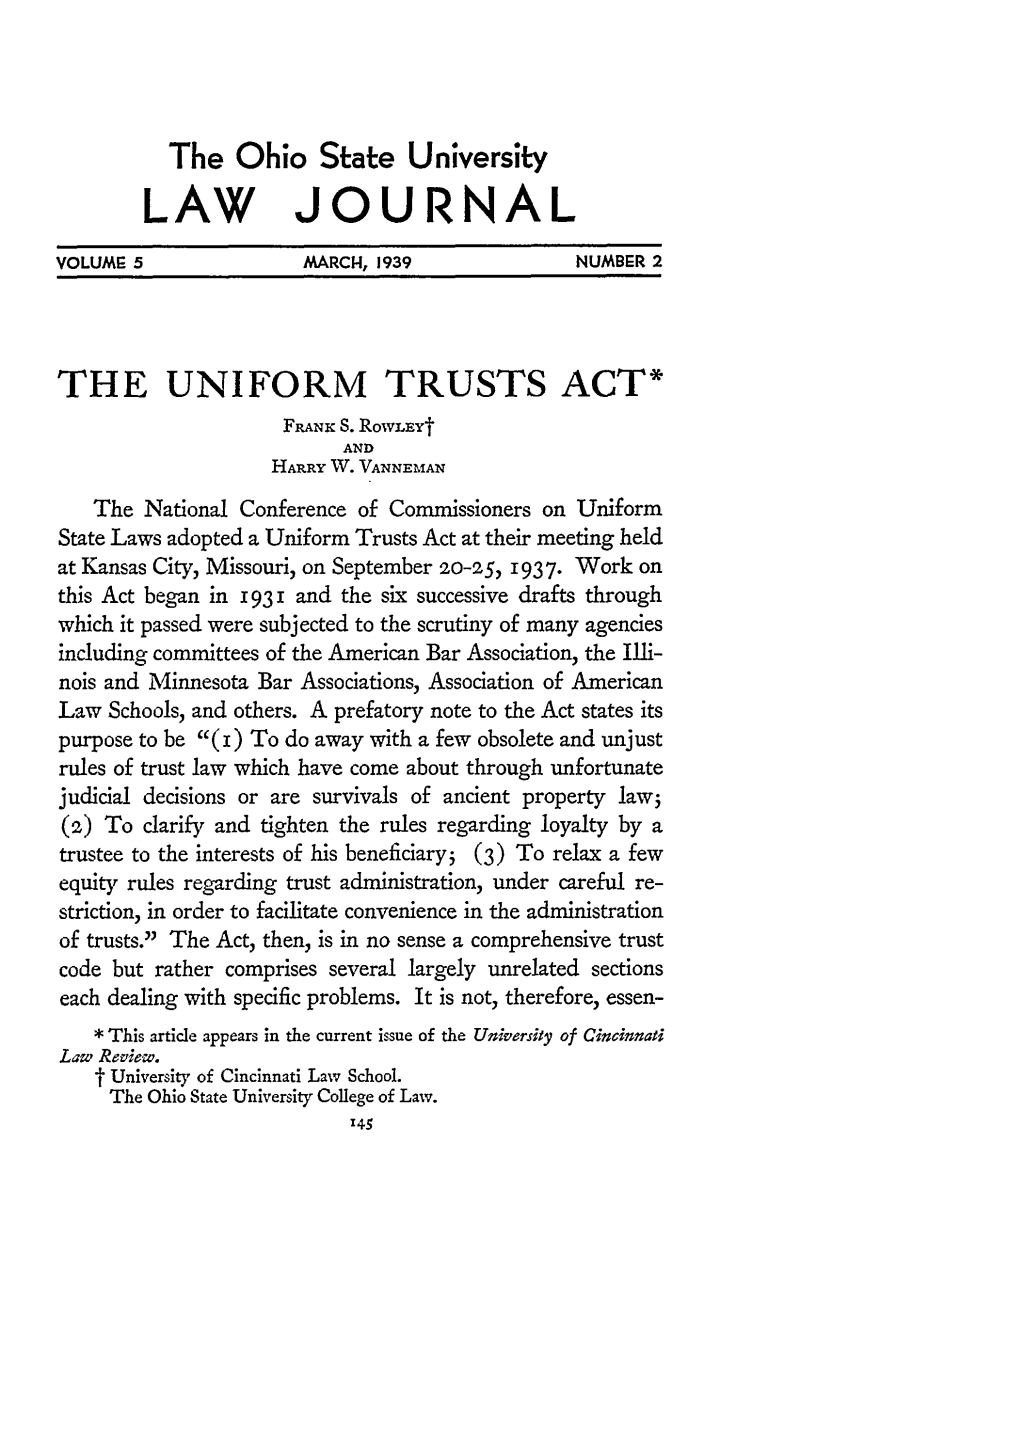 Uniform Trusts Act